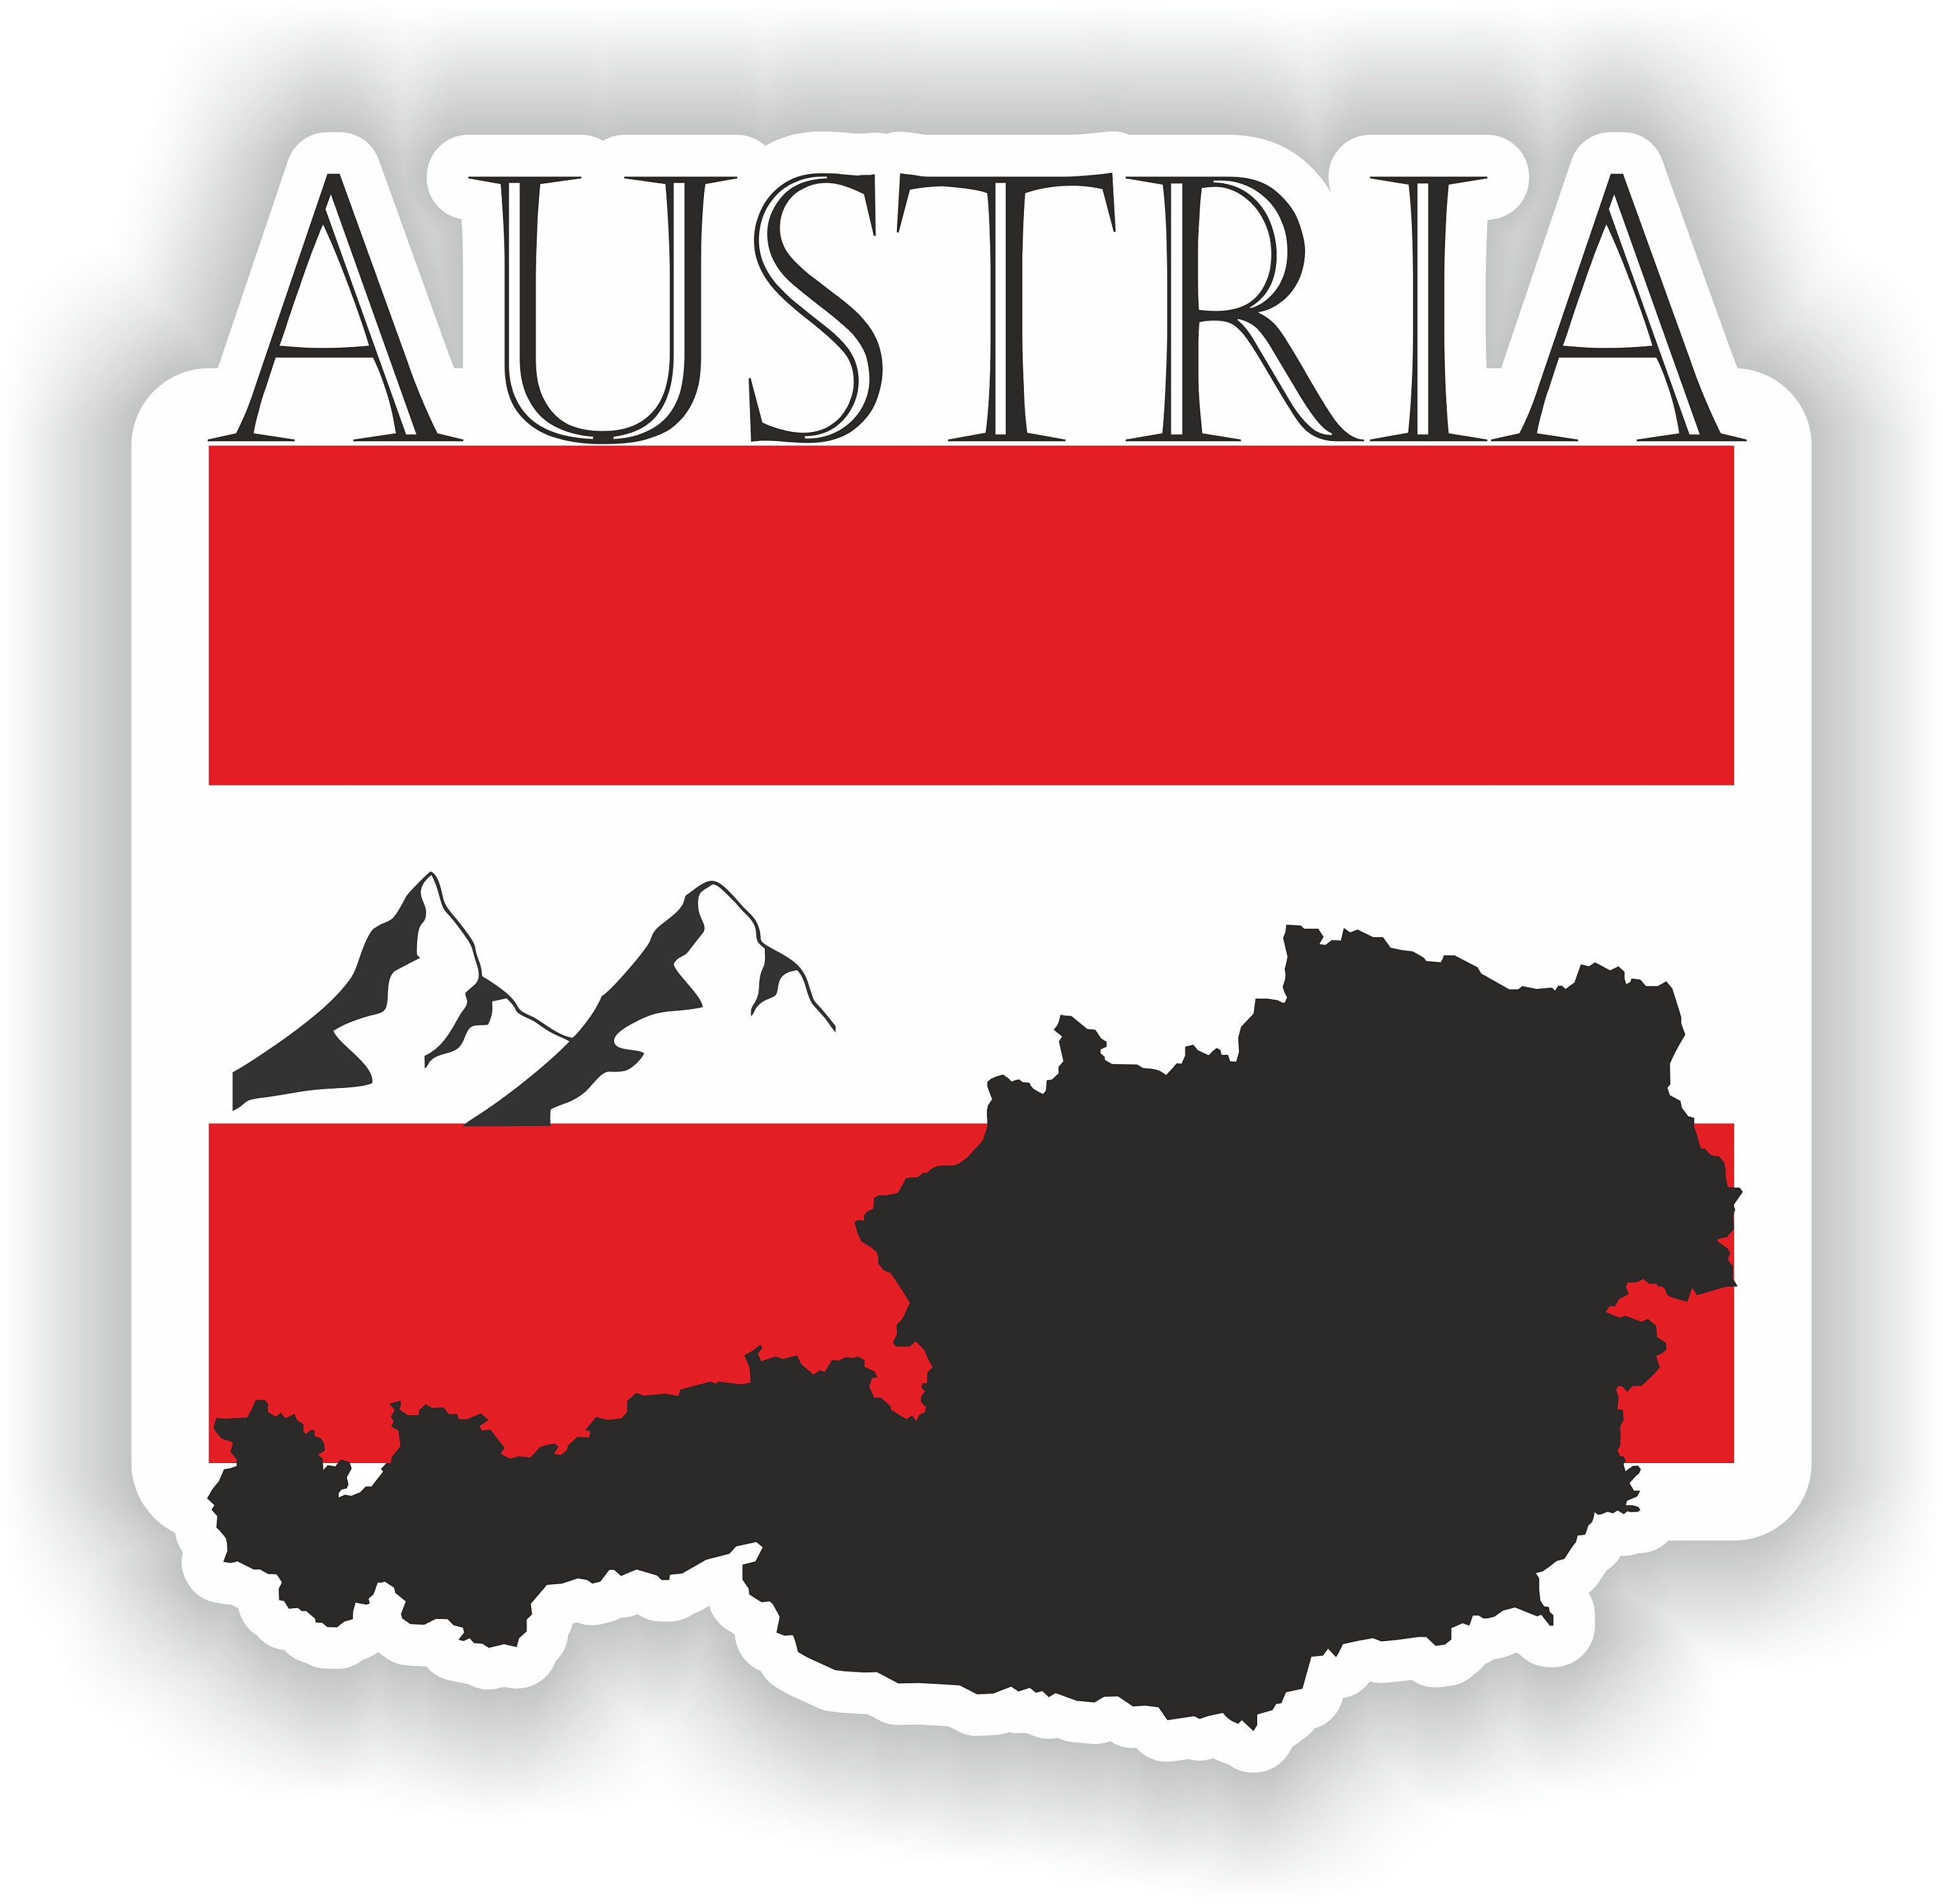 Austria Sticker Flag MF for Laptop Book Fridge Guitar Motorcycle